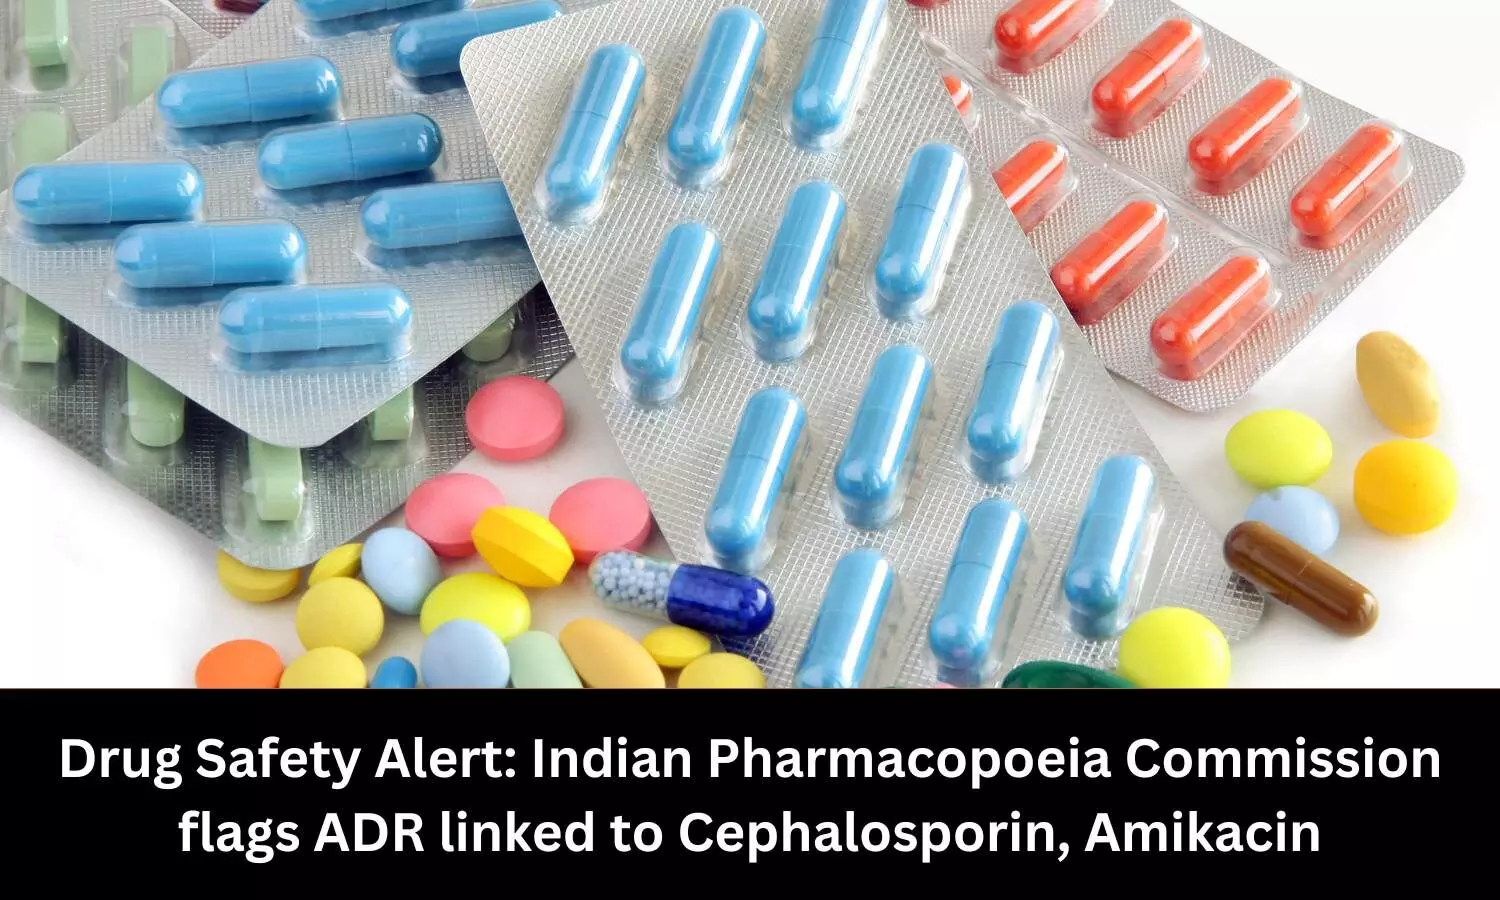 Drug Safety Alert: Indian Pharmacopoeia Commission reveals ADR linked to Cephalosporin, Amikacin